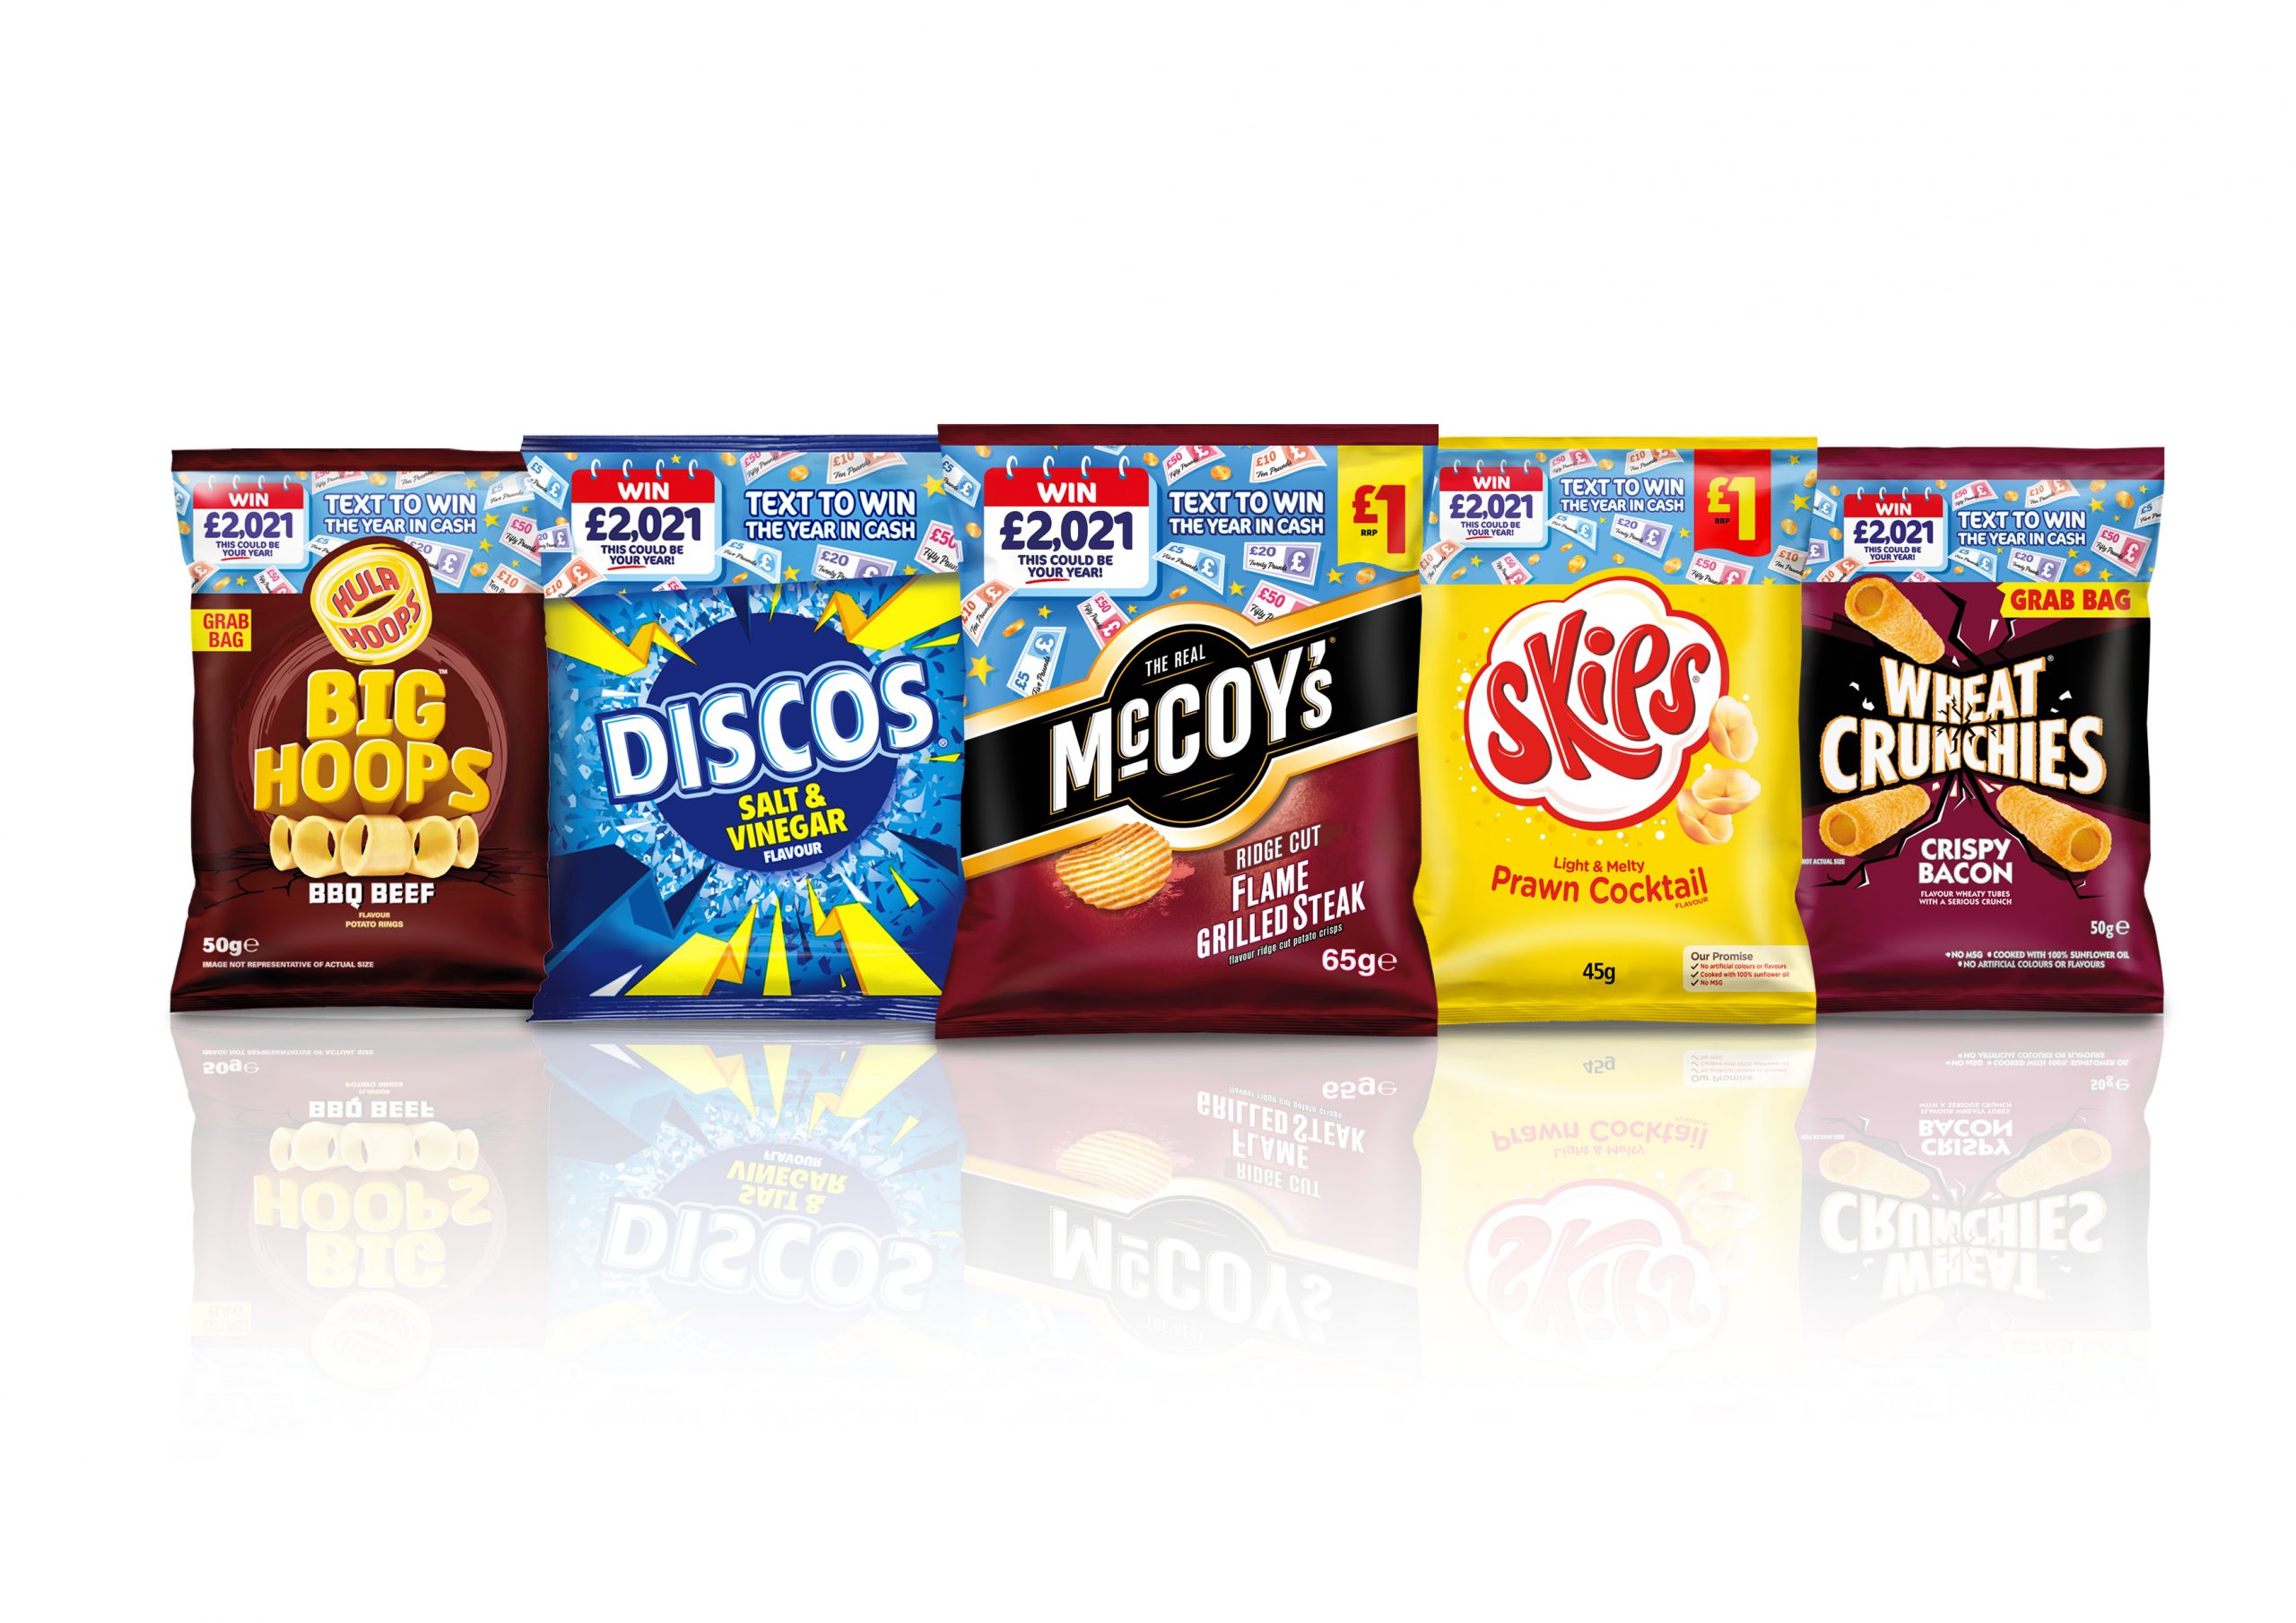 KP Snacks launch new cross-brand promotion – Win £2021